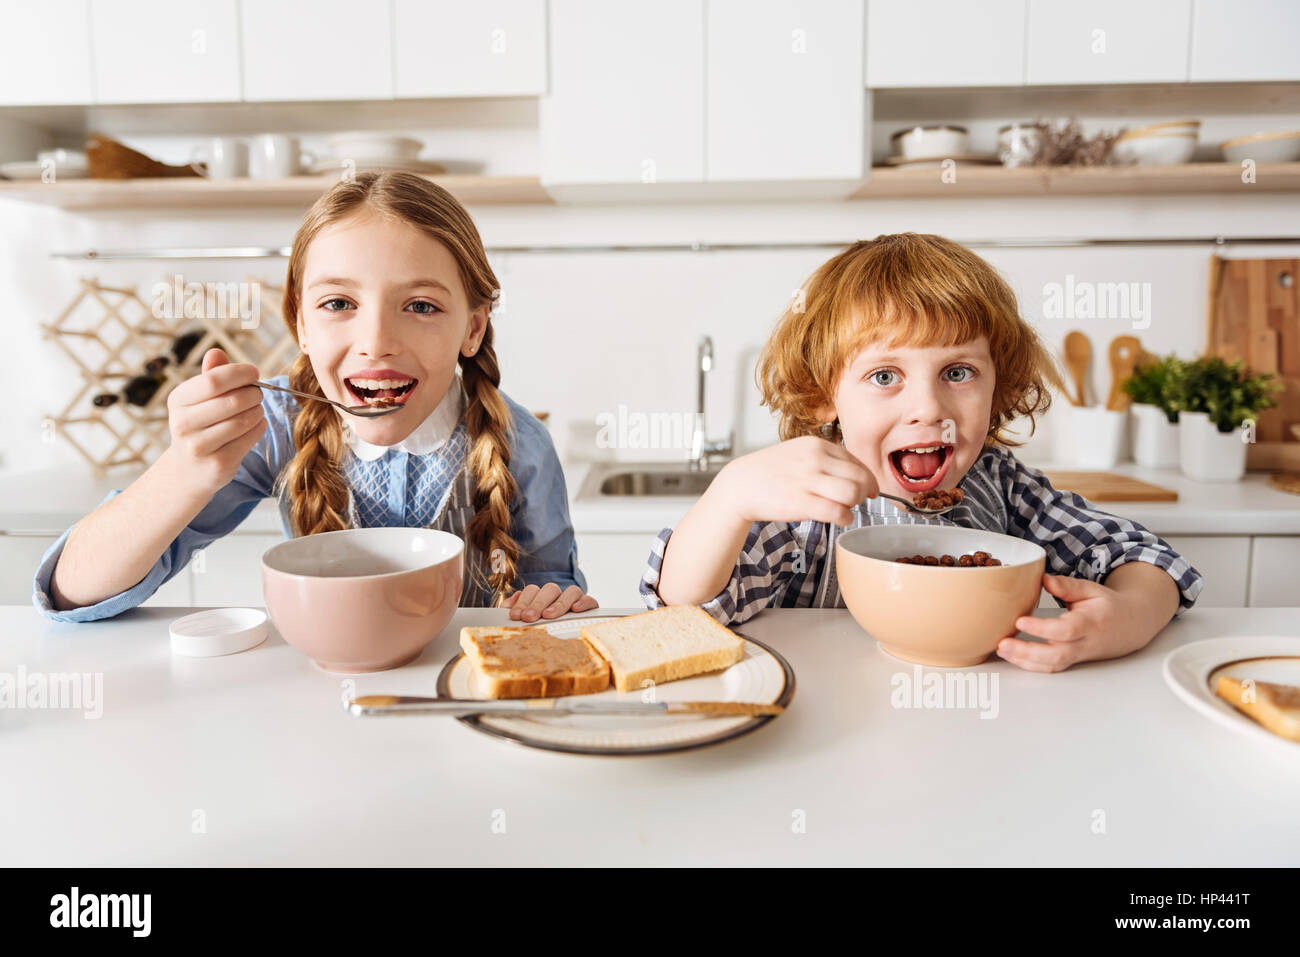 Bright positive children enjoying tasty chocolate flavored breakfast Stock Photo